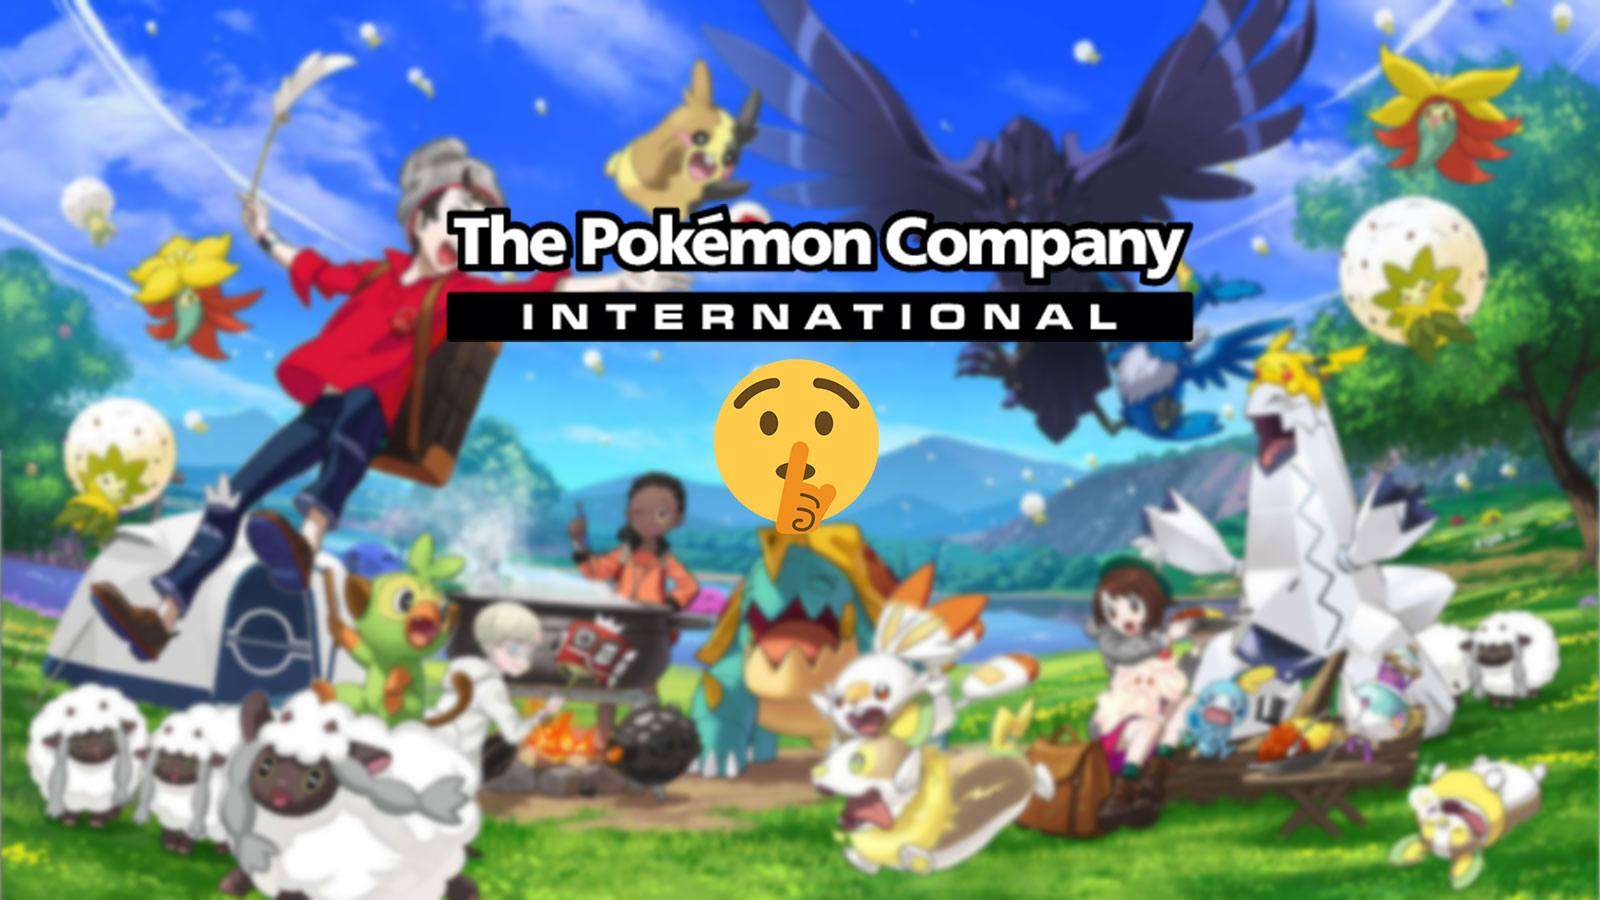 The Pokémon company